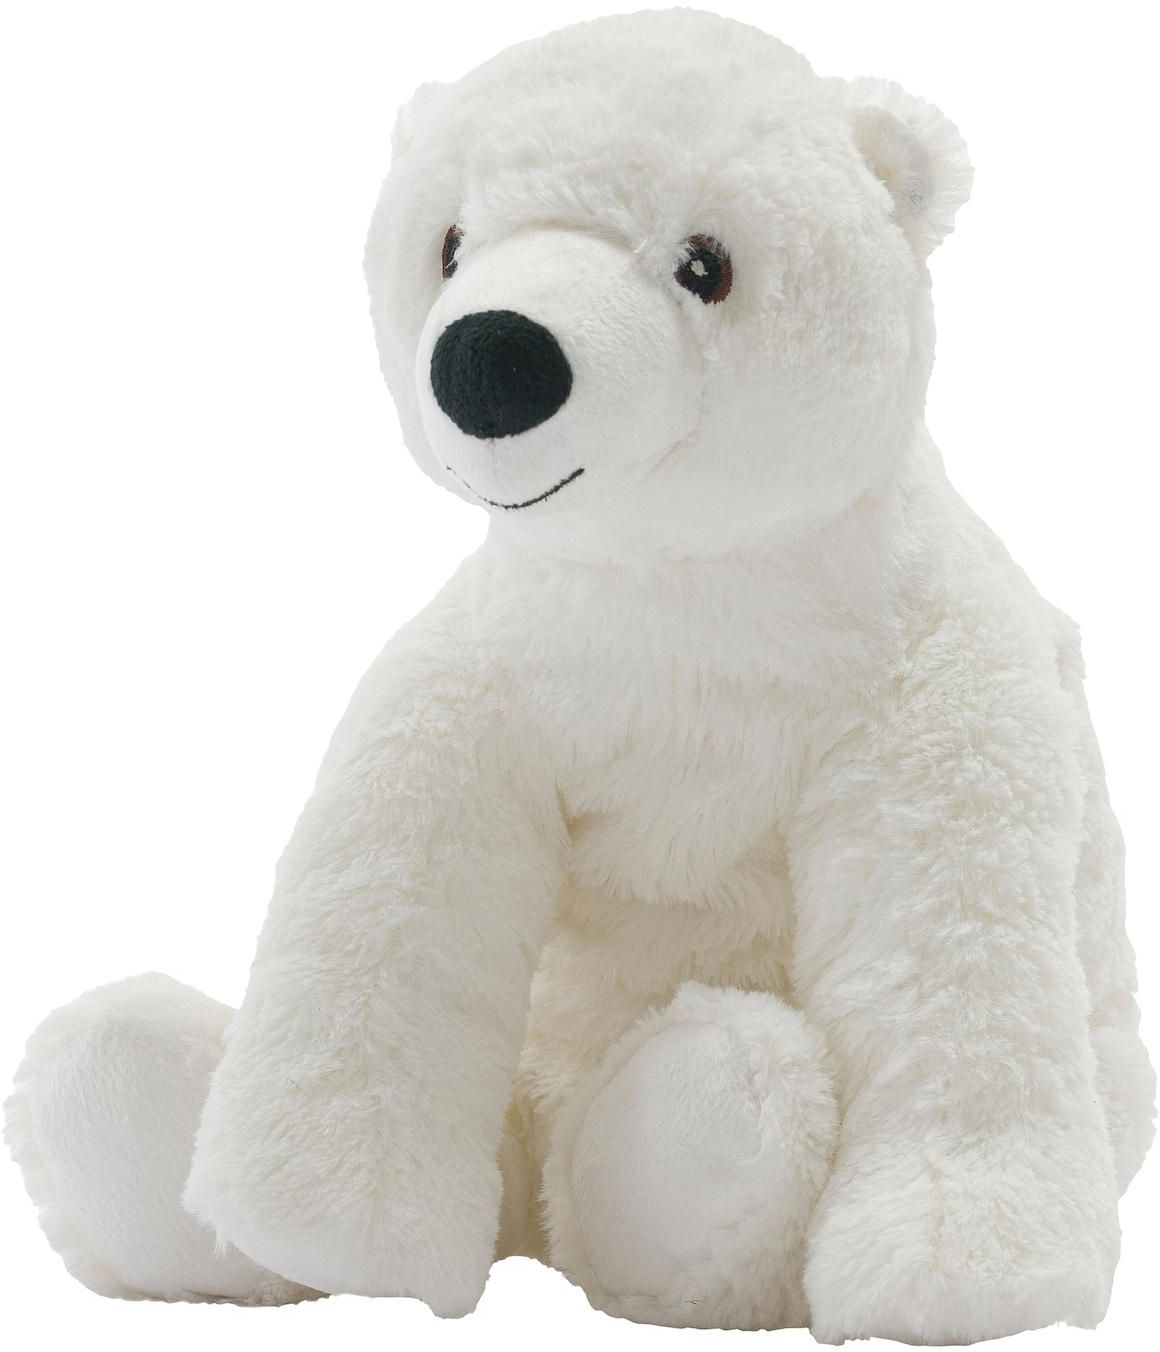 SNUTTIG دمية طرية - أبيض الدب القطبي 29 سم